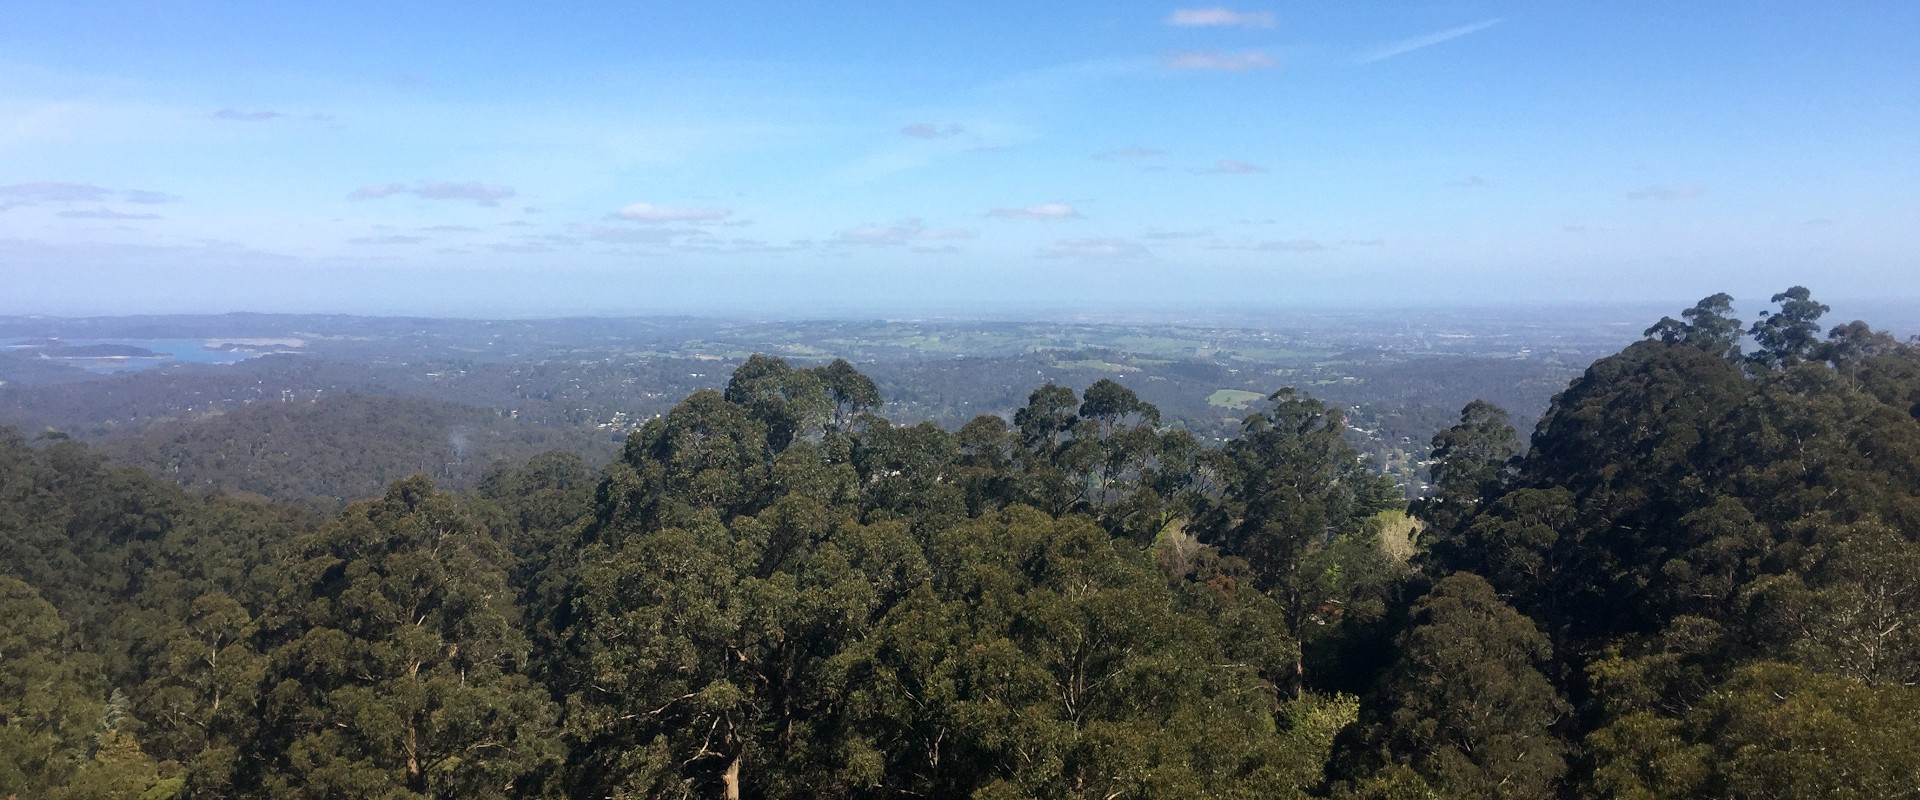 Dense forest on hills near Melbourne Victoria.